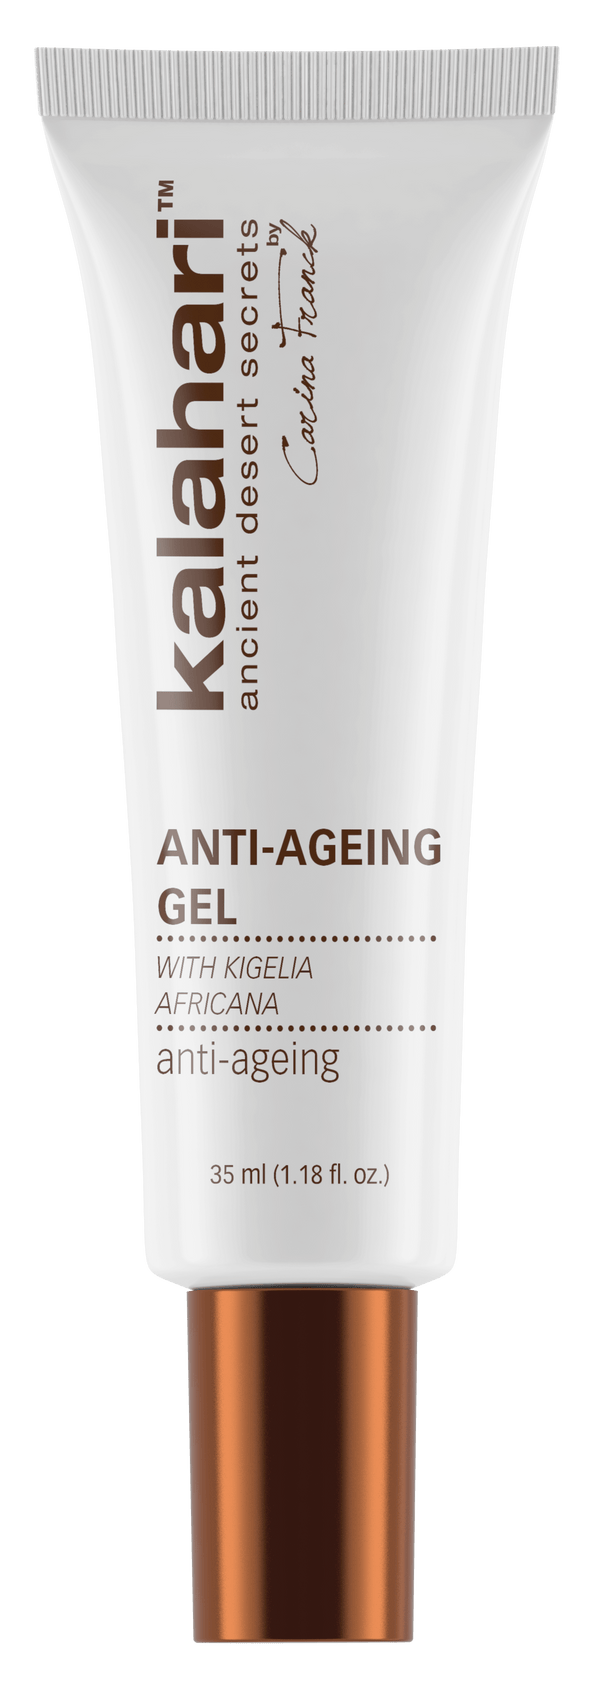 Anti ageing gel